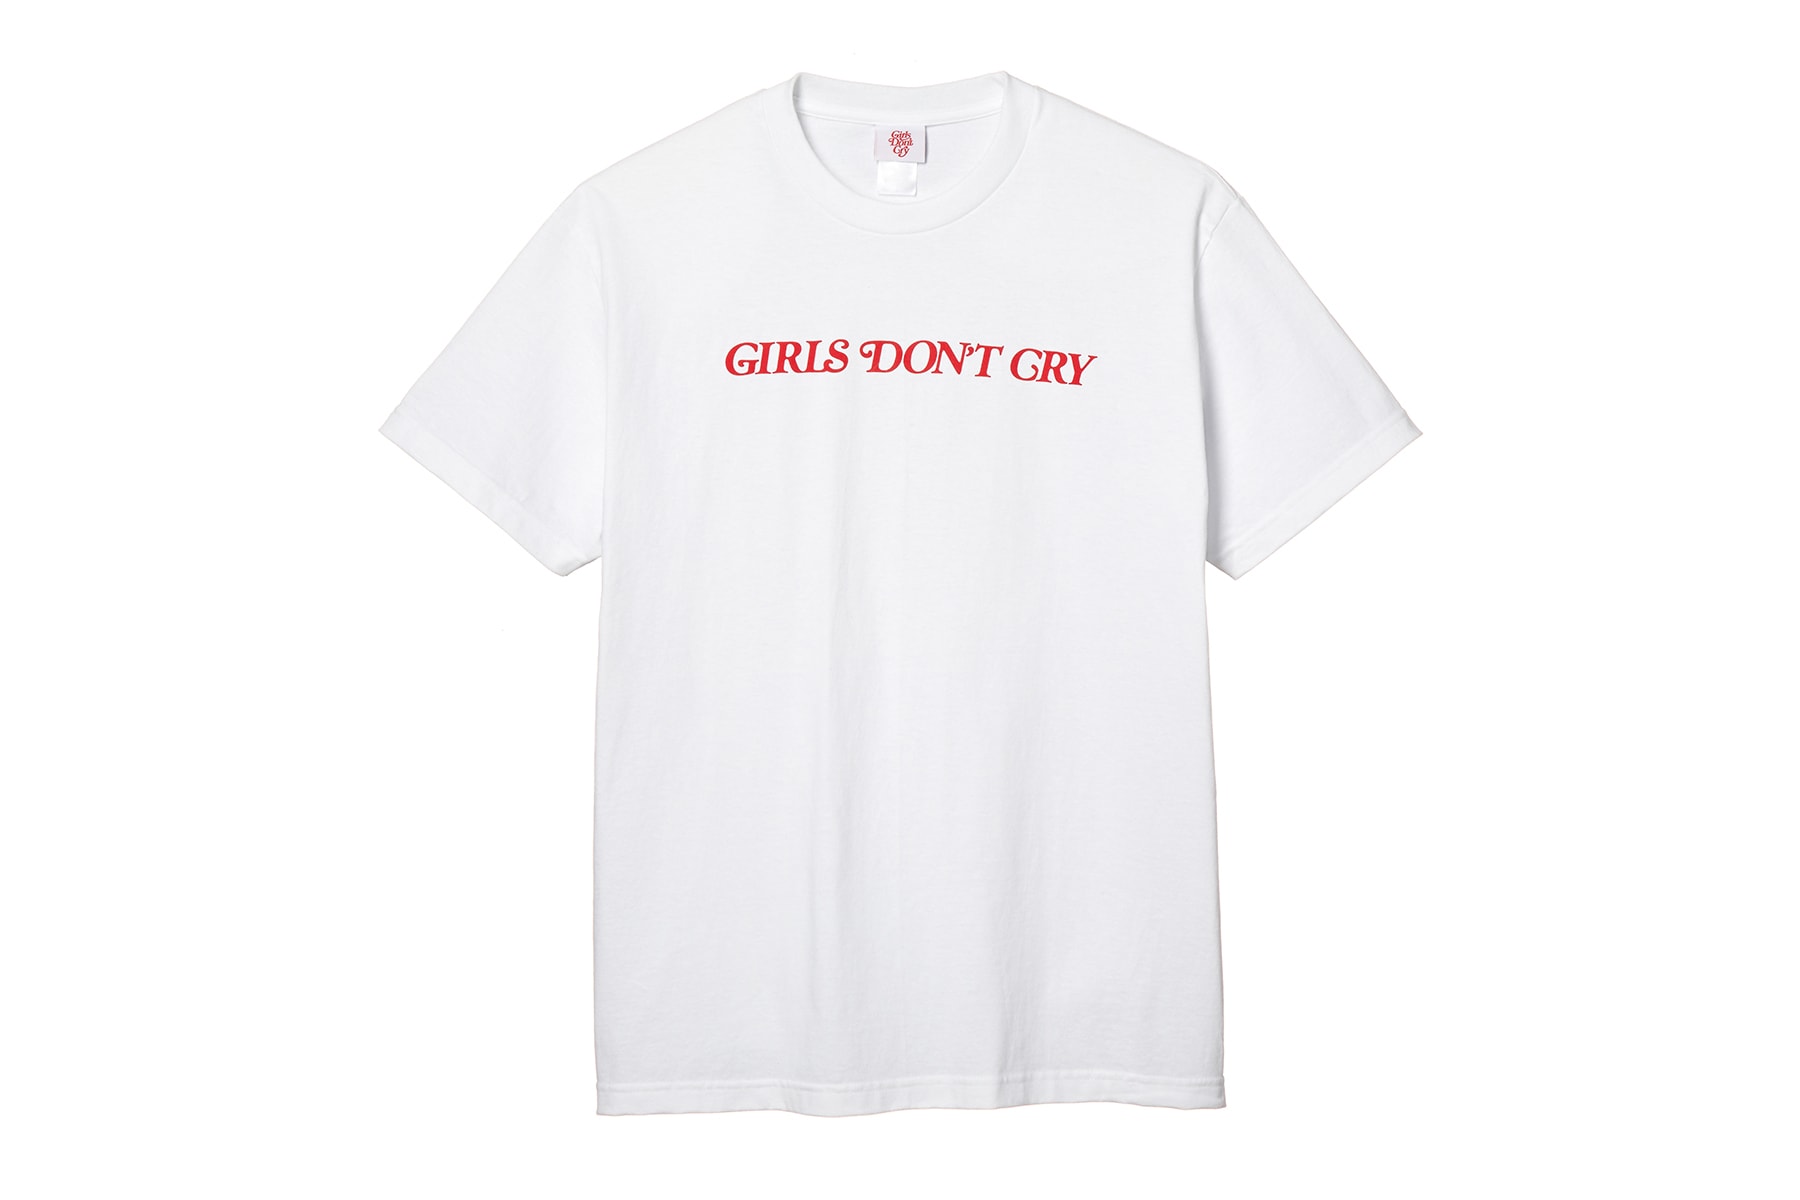 Girls Don't Cry x Amazon Fashion 全新聯名「AT TOKYO」系列登場